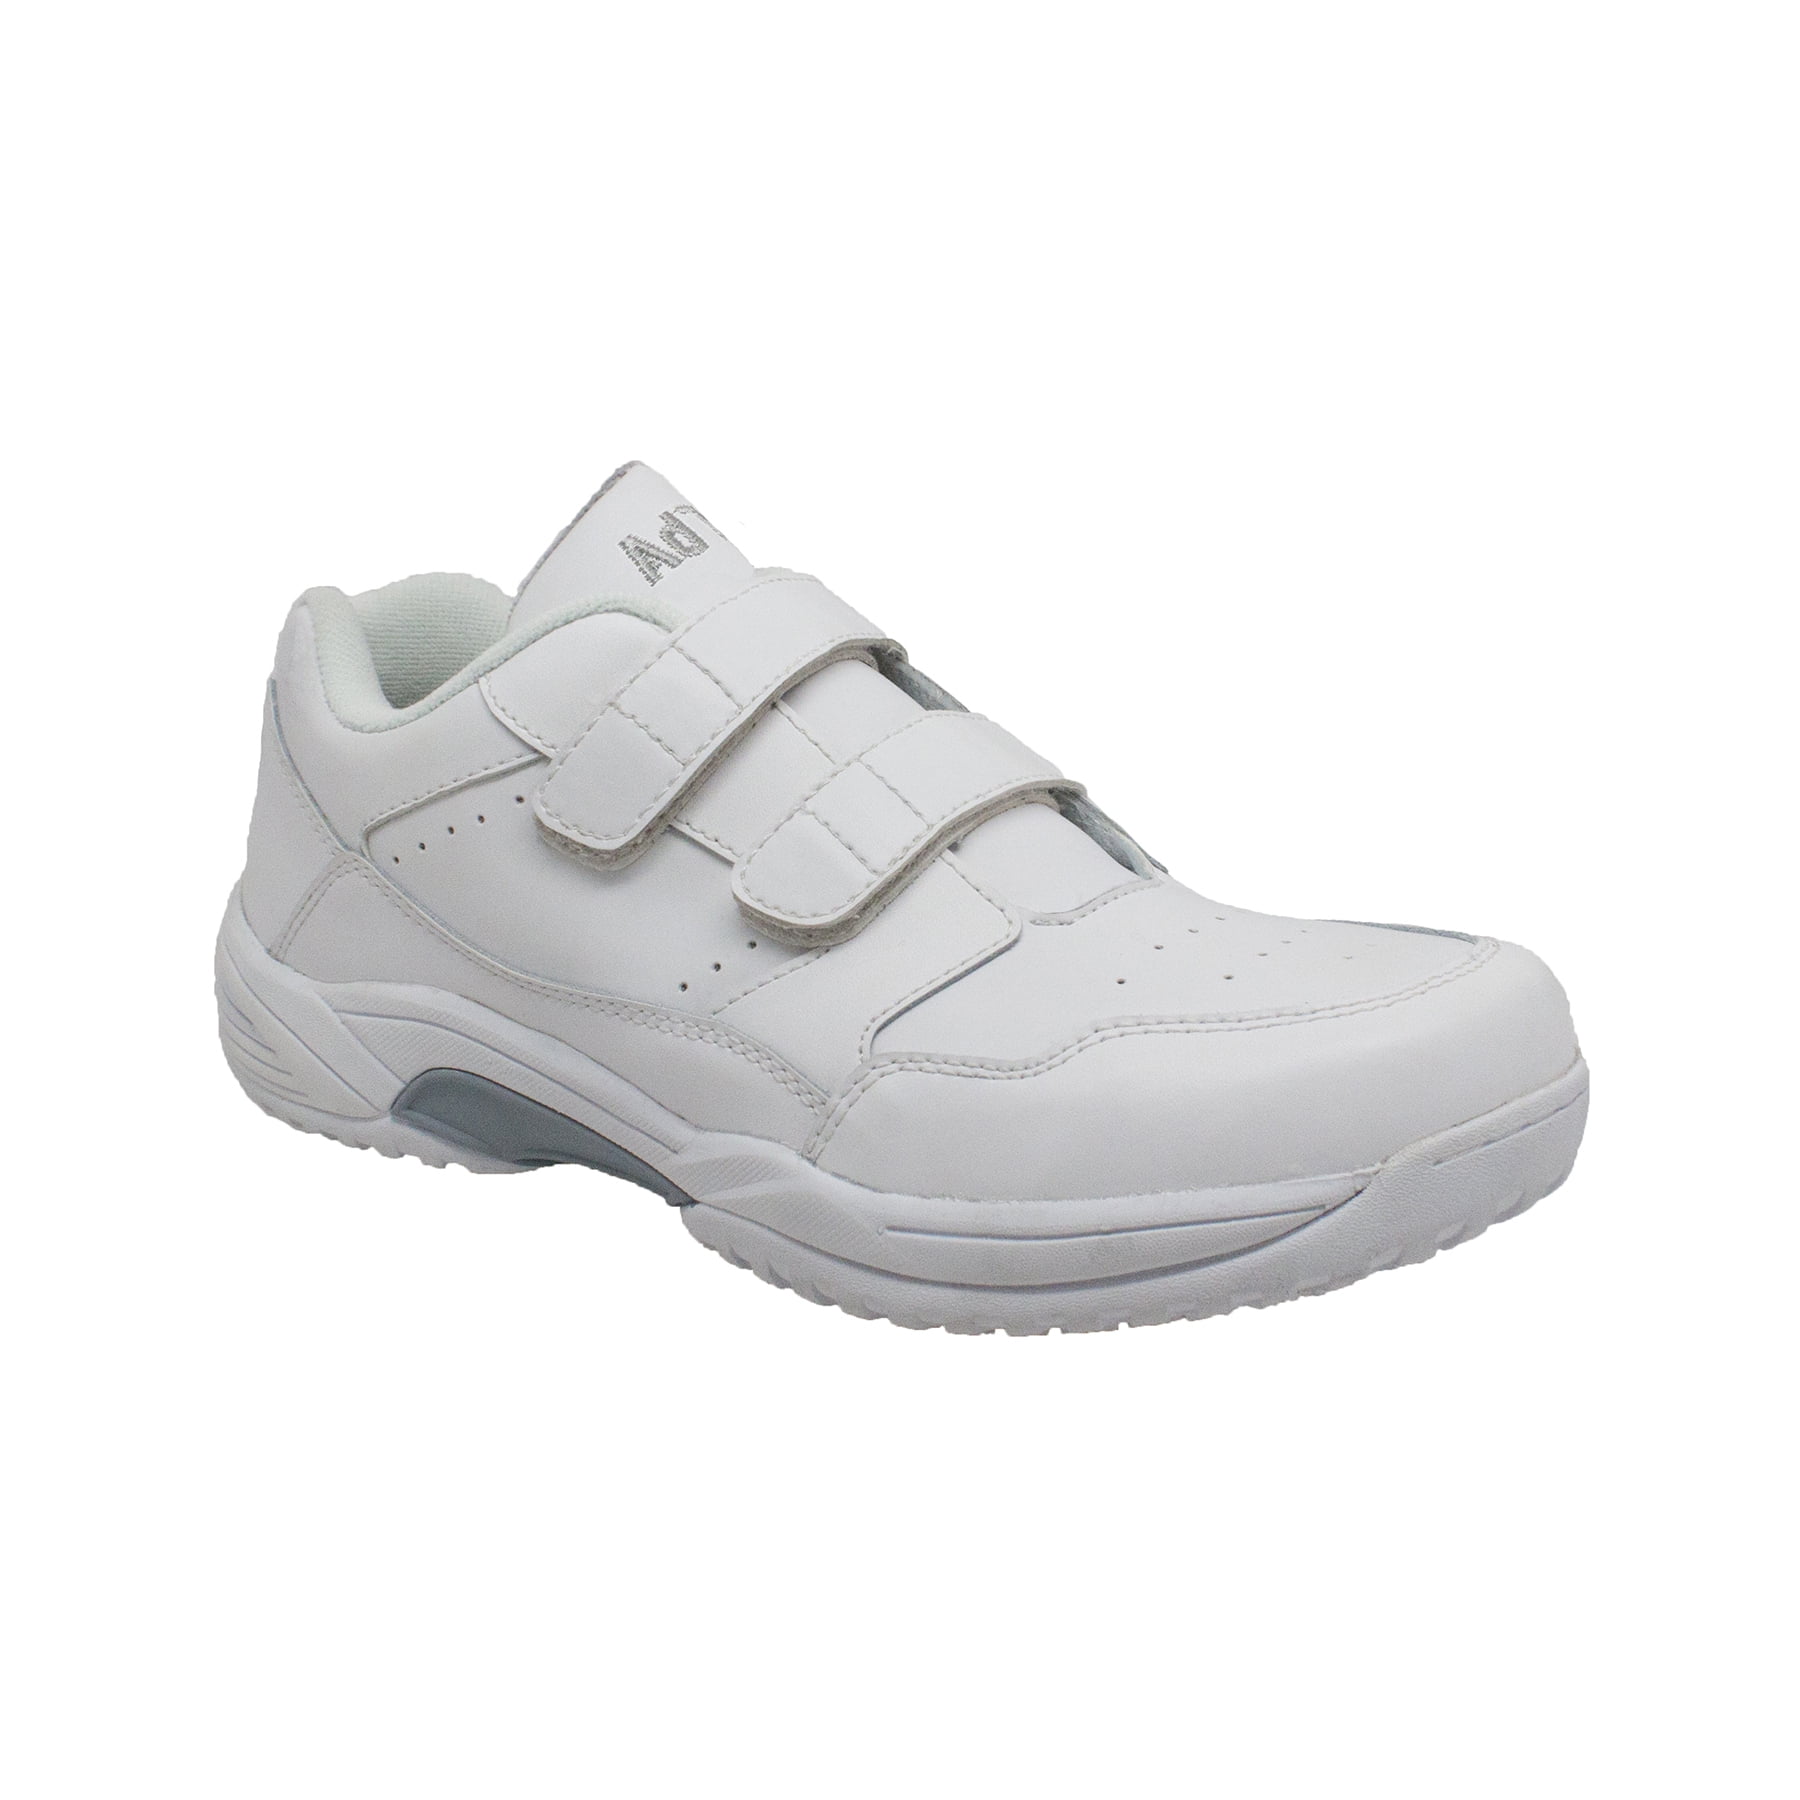 mens white velcro tennis shoes